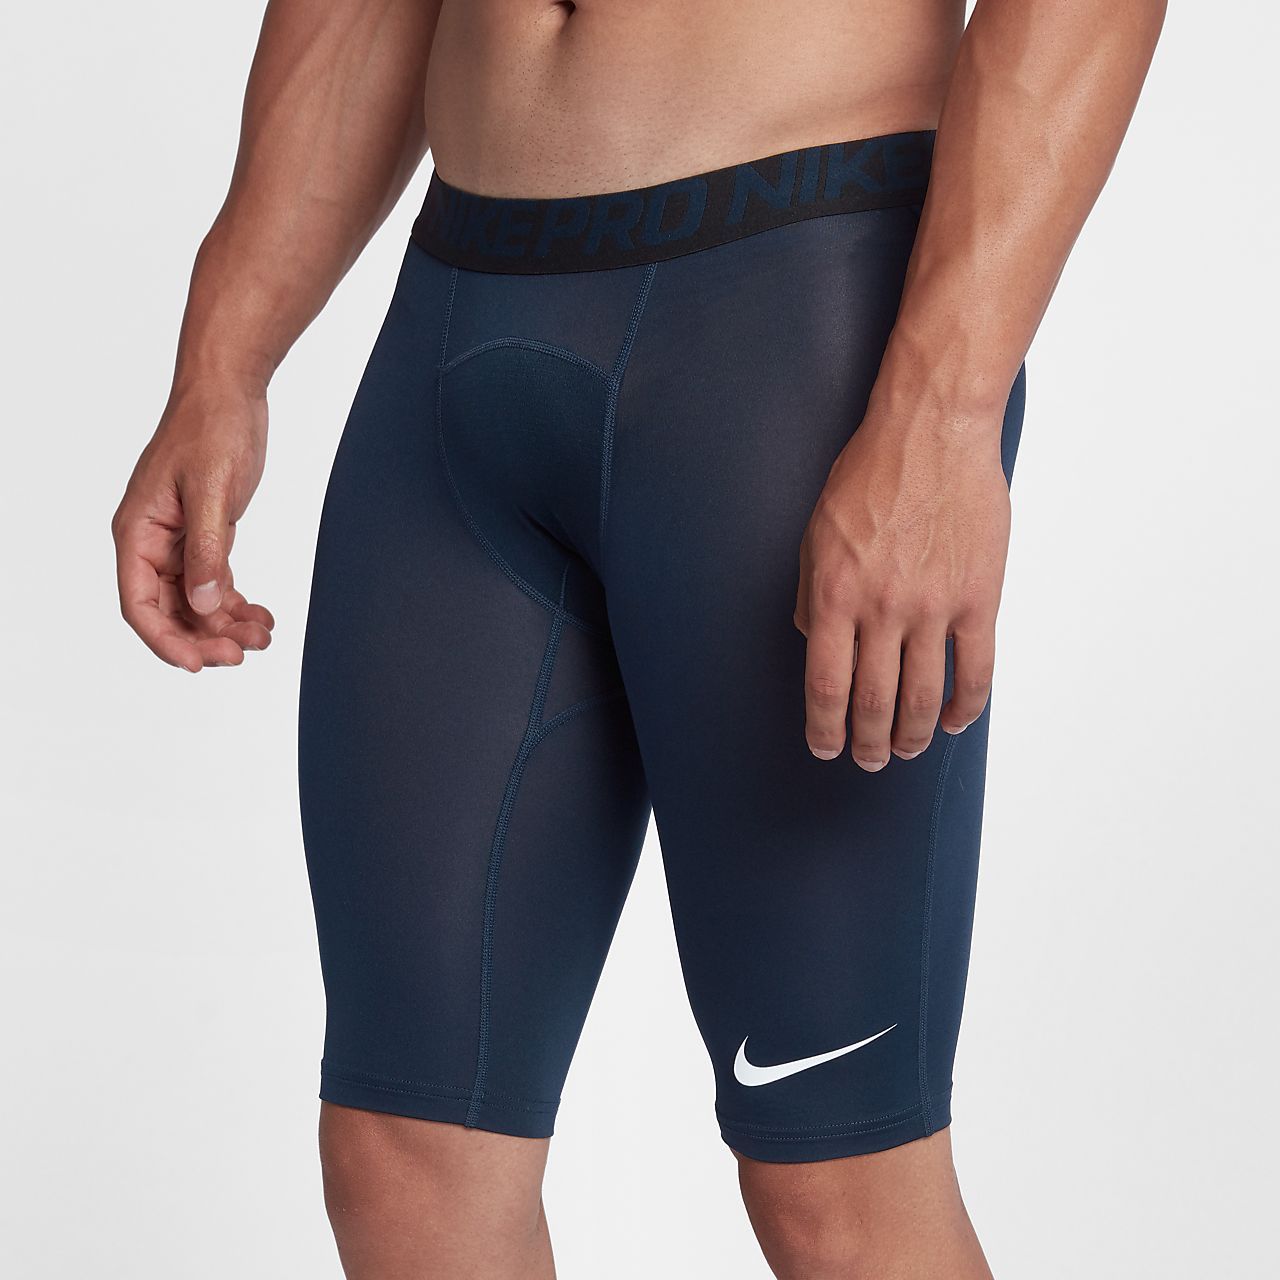 Mens Compression Shorts Fitness Running Gym Training Underwear Spandex Tight fit 